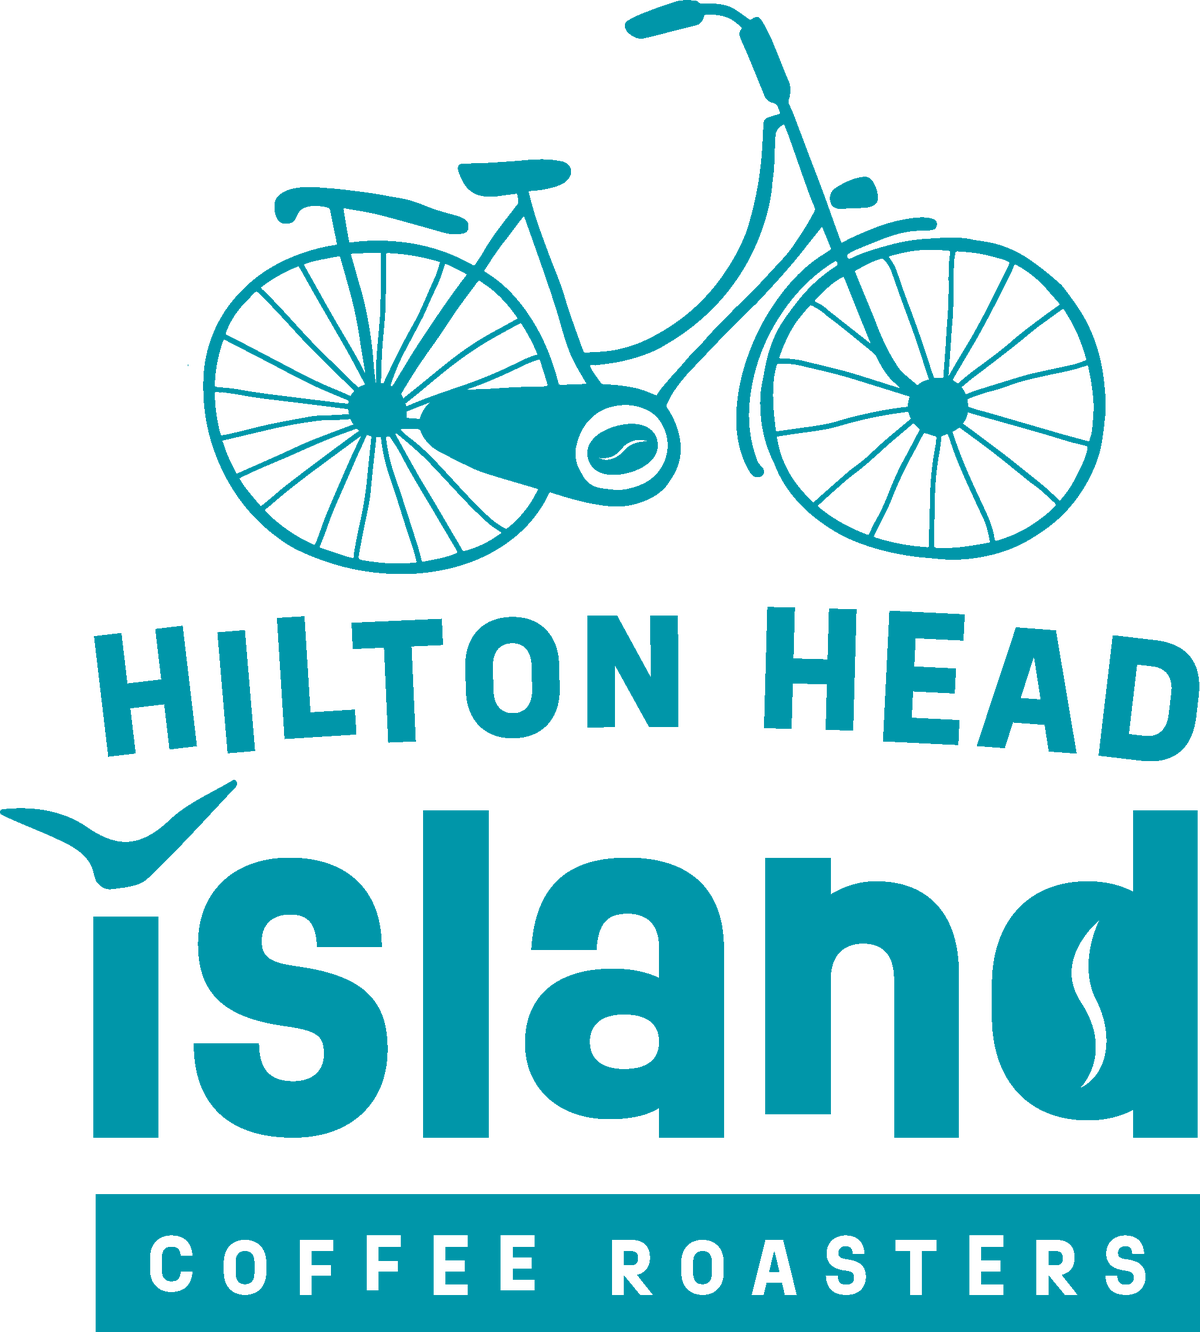 Hilton Head Coffee Roasters Hilton Head Island Coffee Roasters